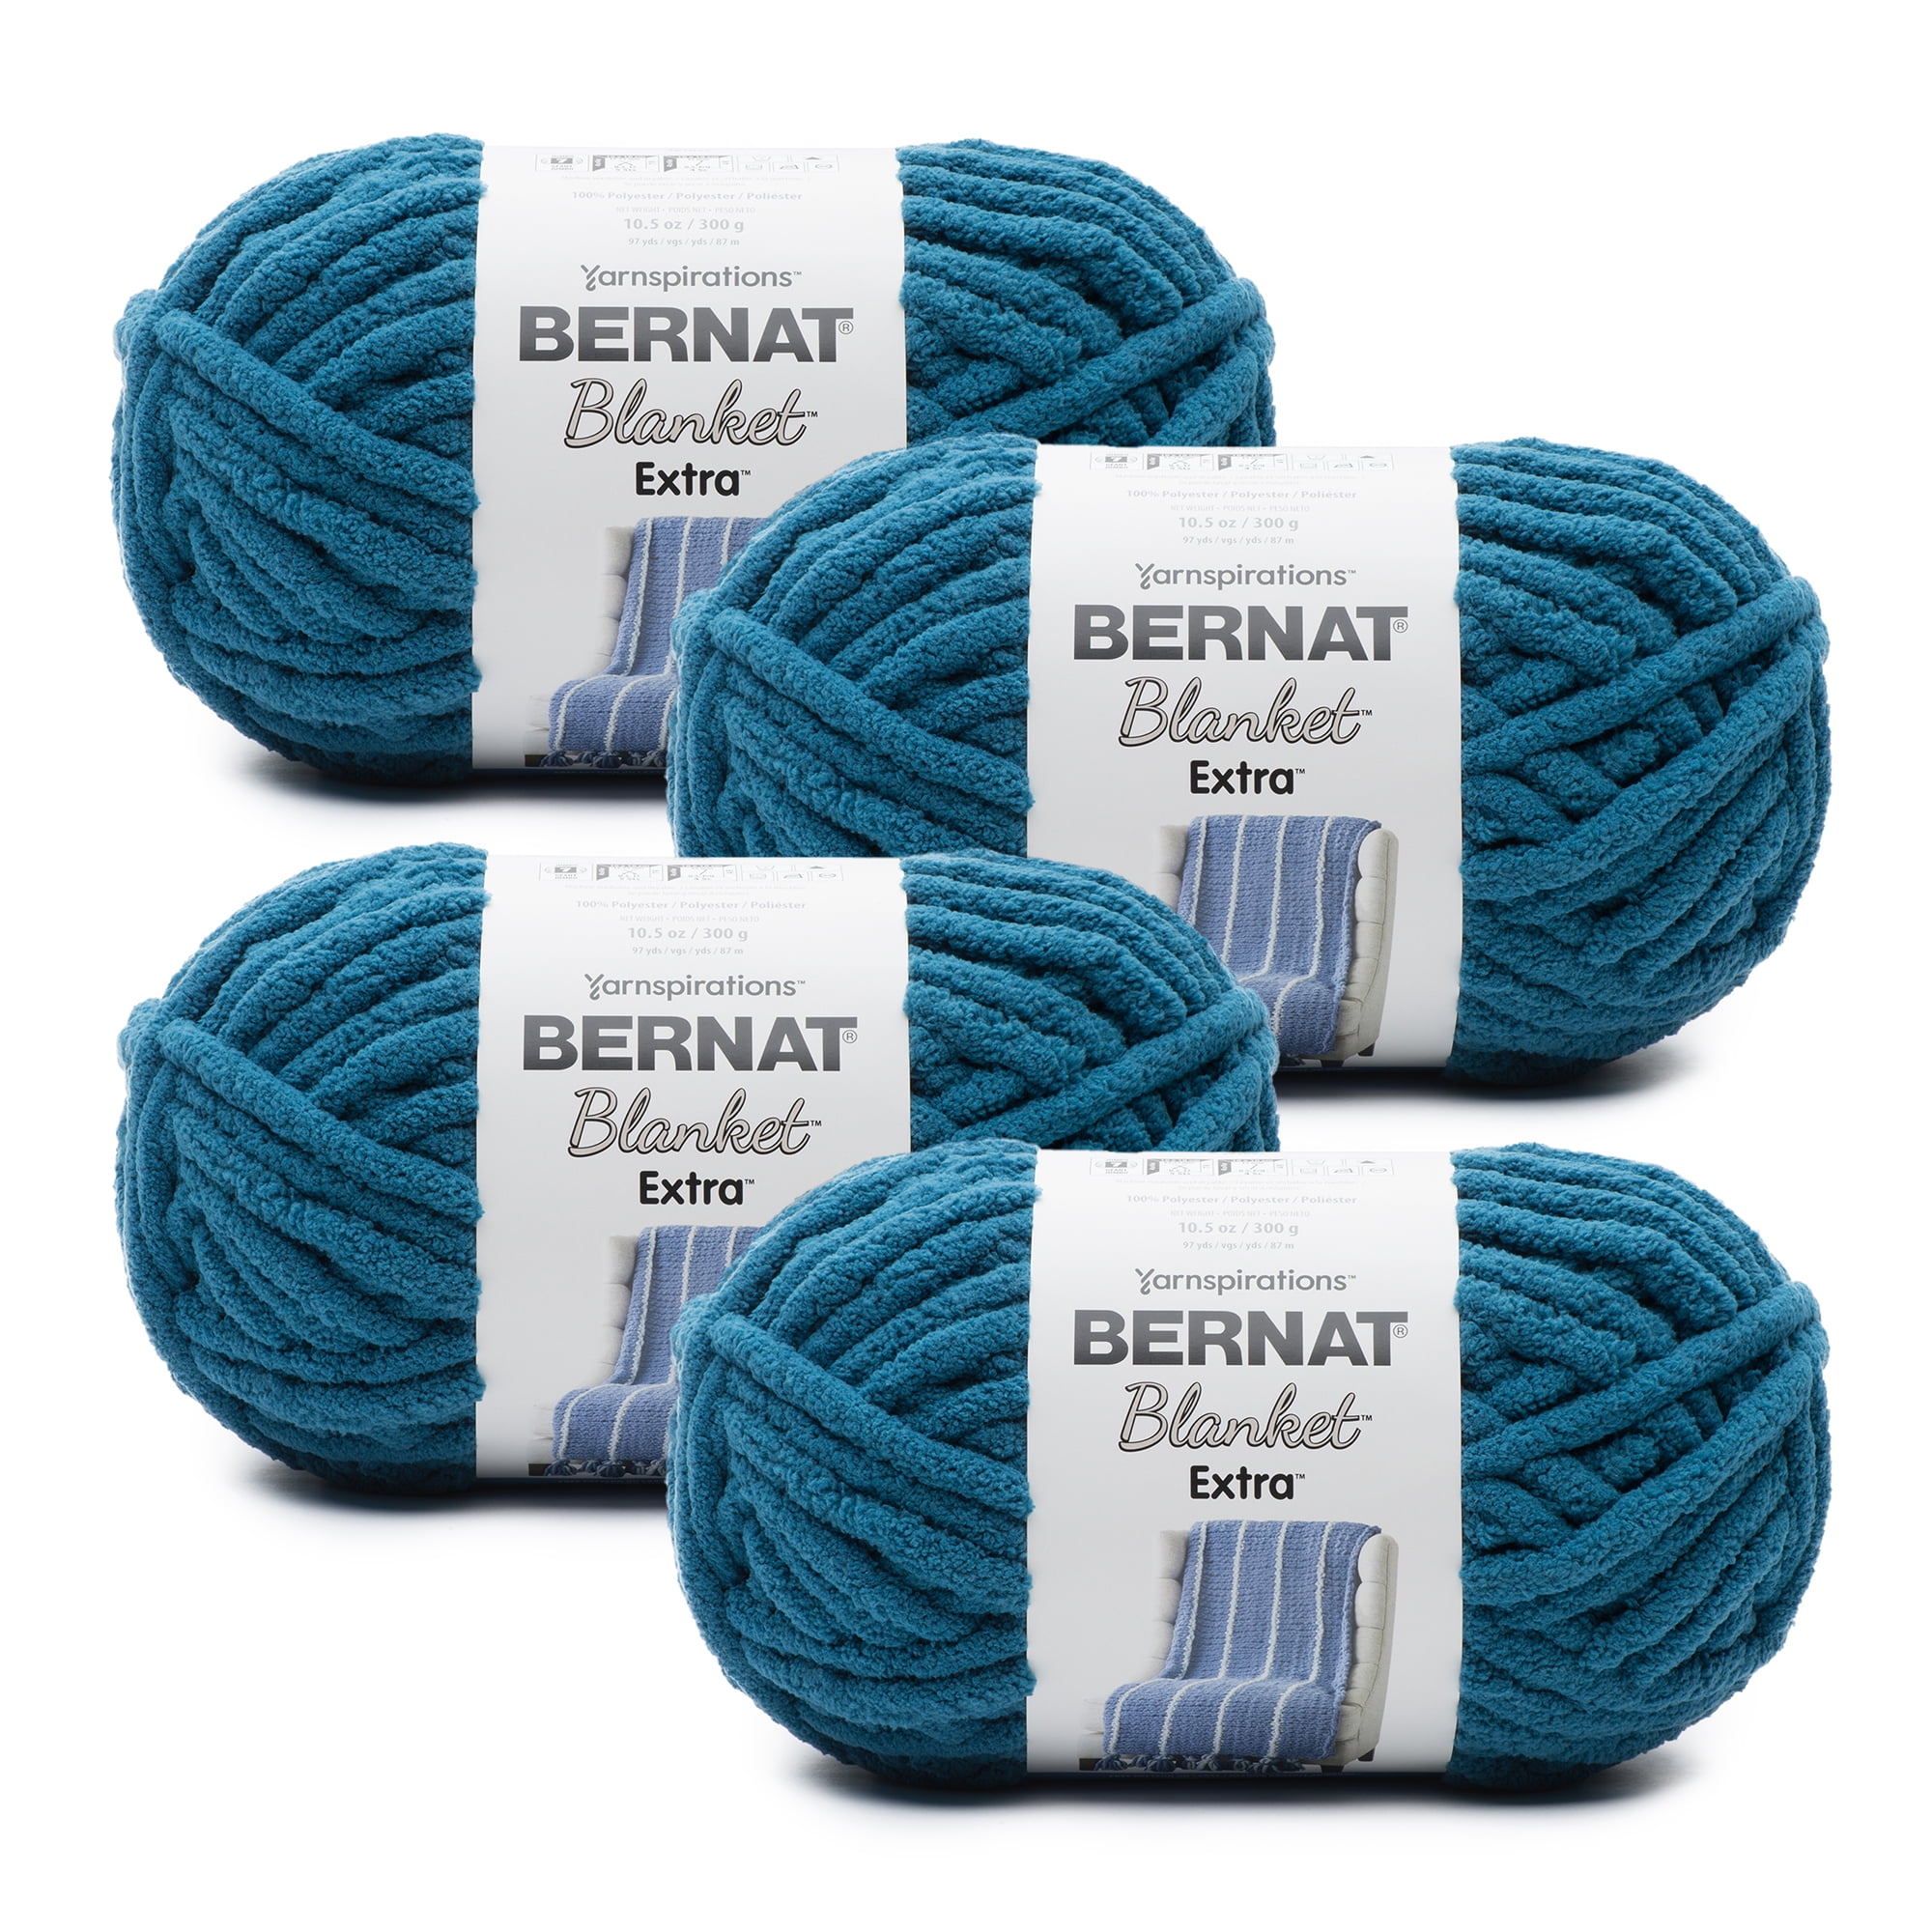 Bernat Blanket Extra Yarn Black 1610272-7033 (2-Skeins) Same Dye Lot Jumbo #7 Soft 100% Polyester Bundle with 1 Artsiga Craft Bag